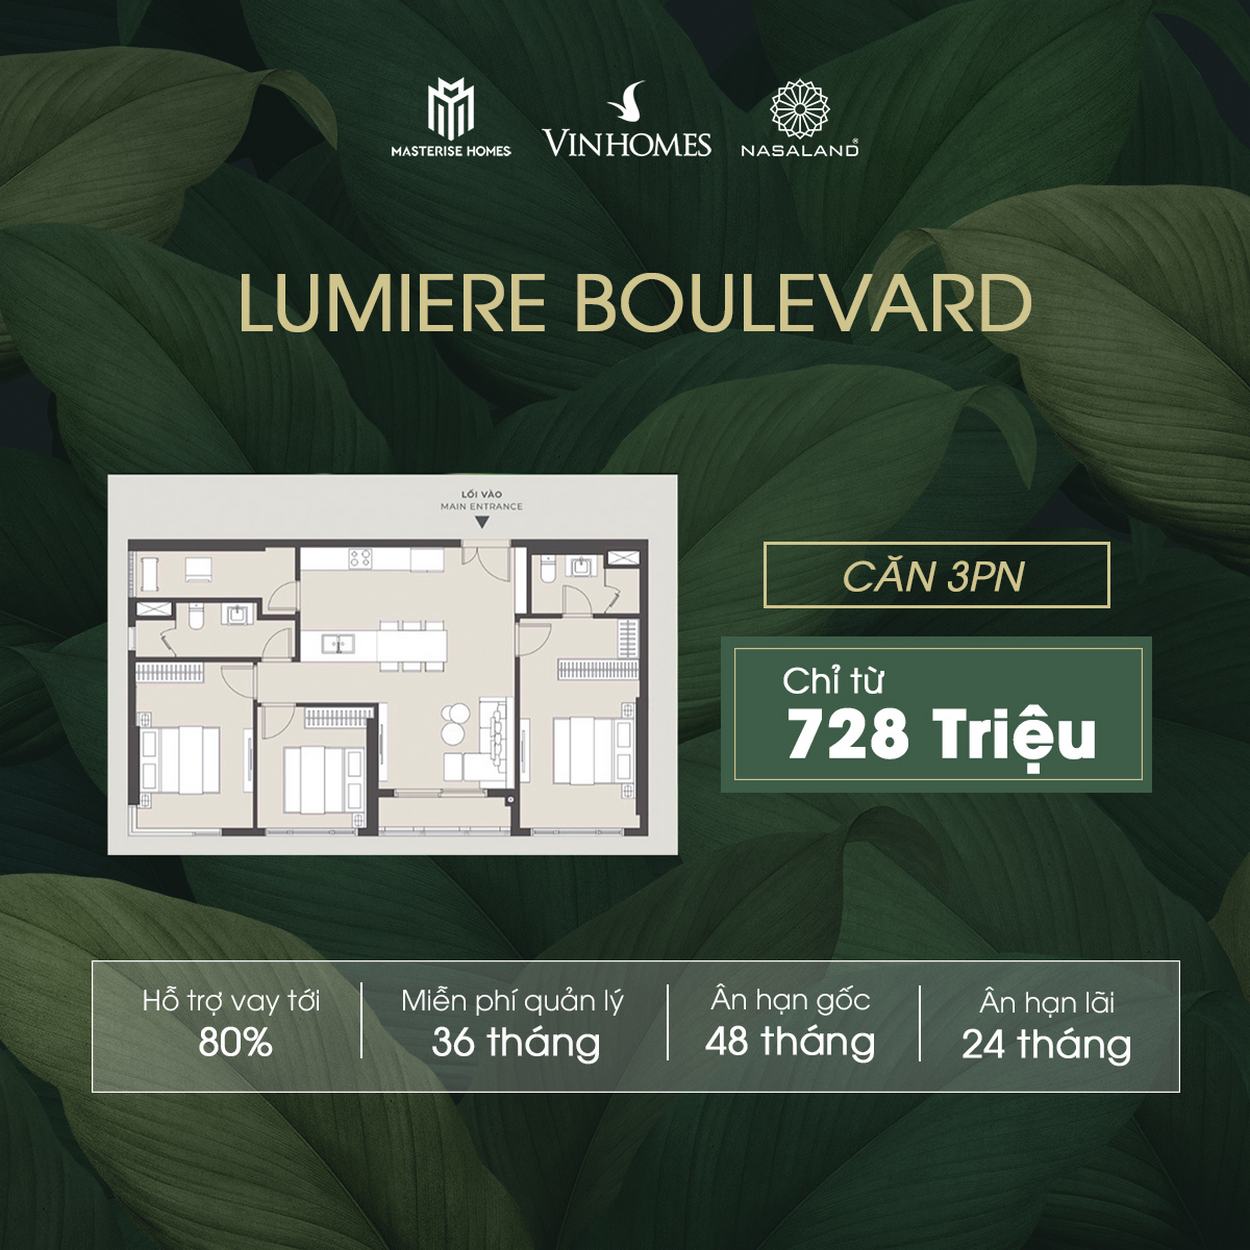 Giá bán Lumiere Boulevard - Căn hộ 3PN